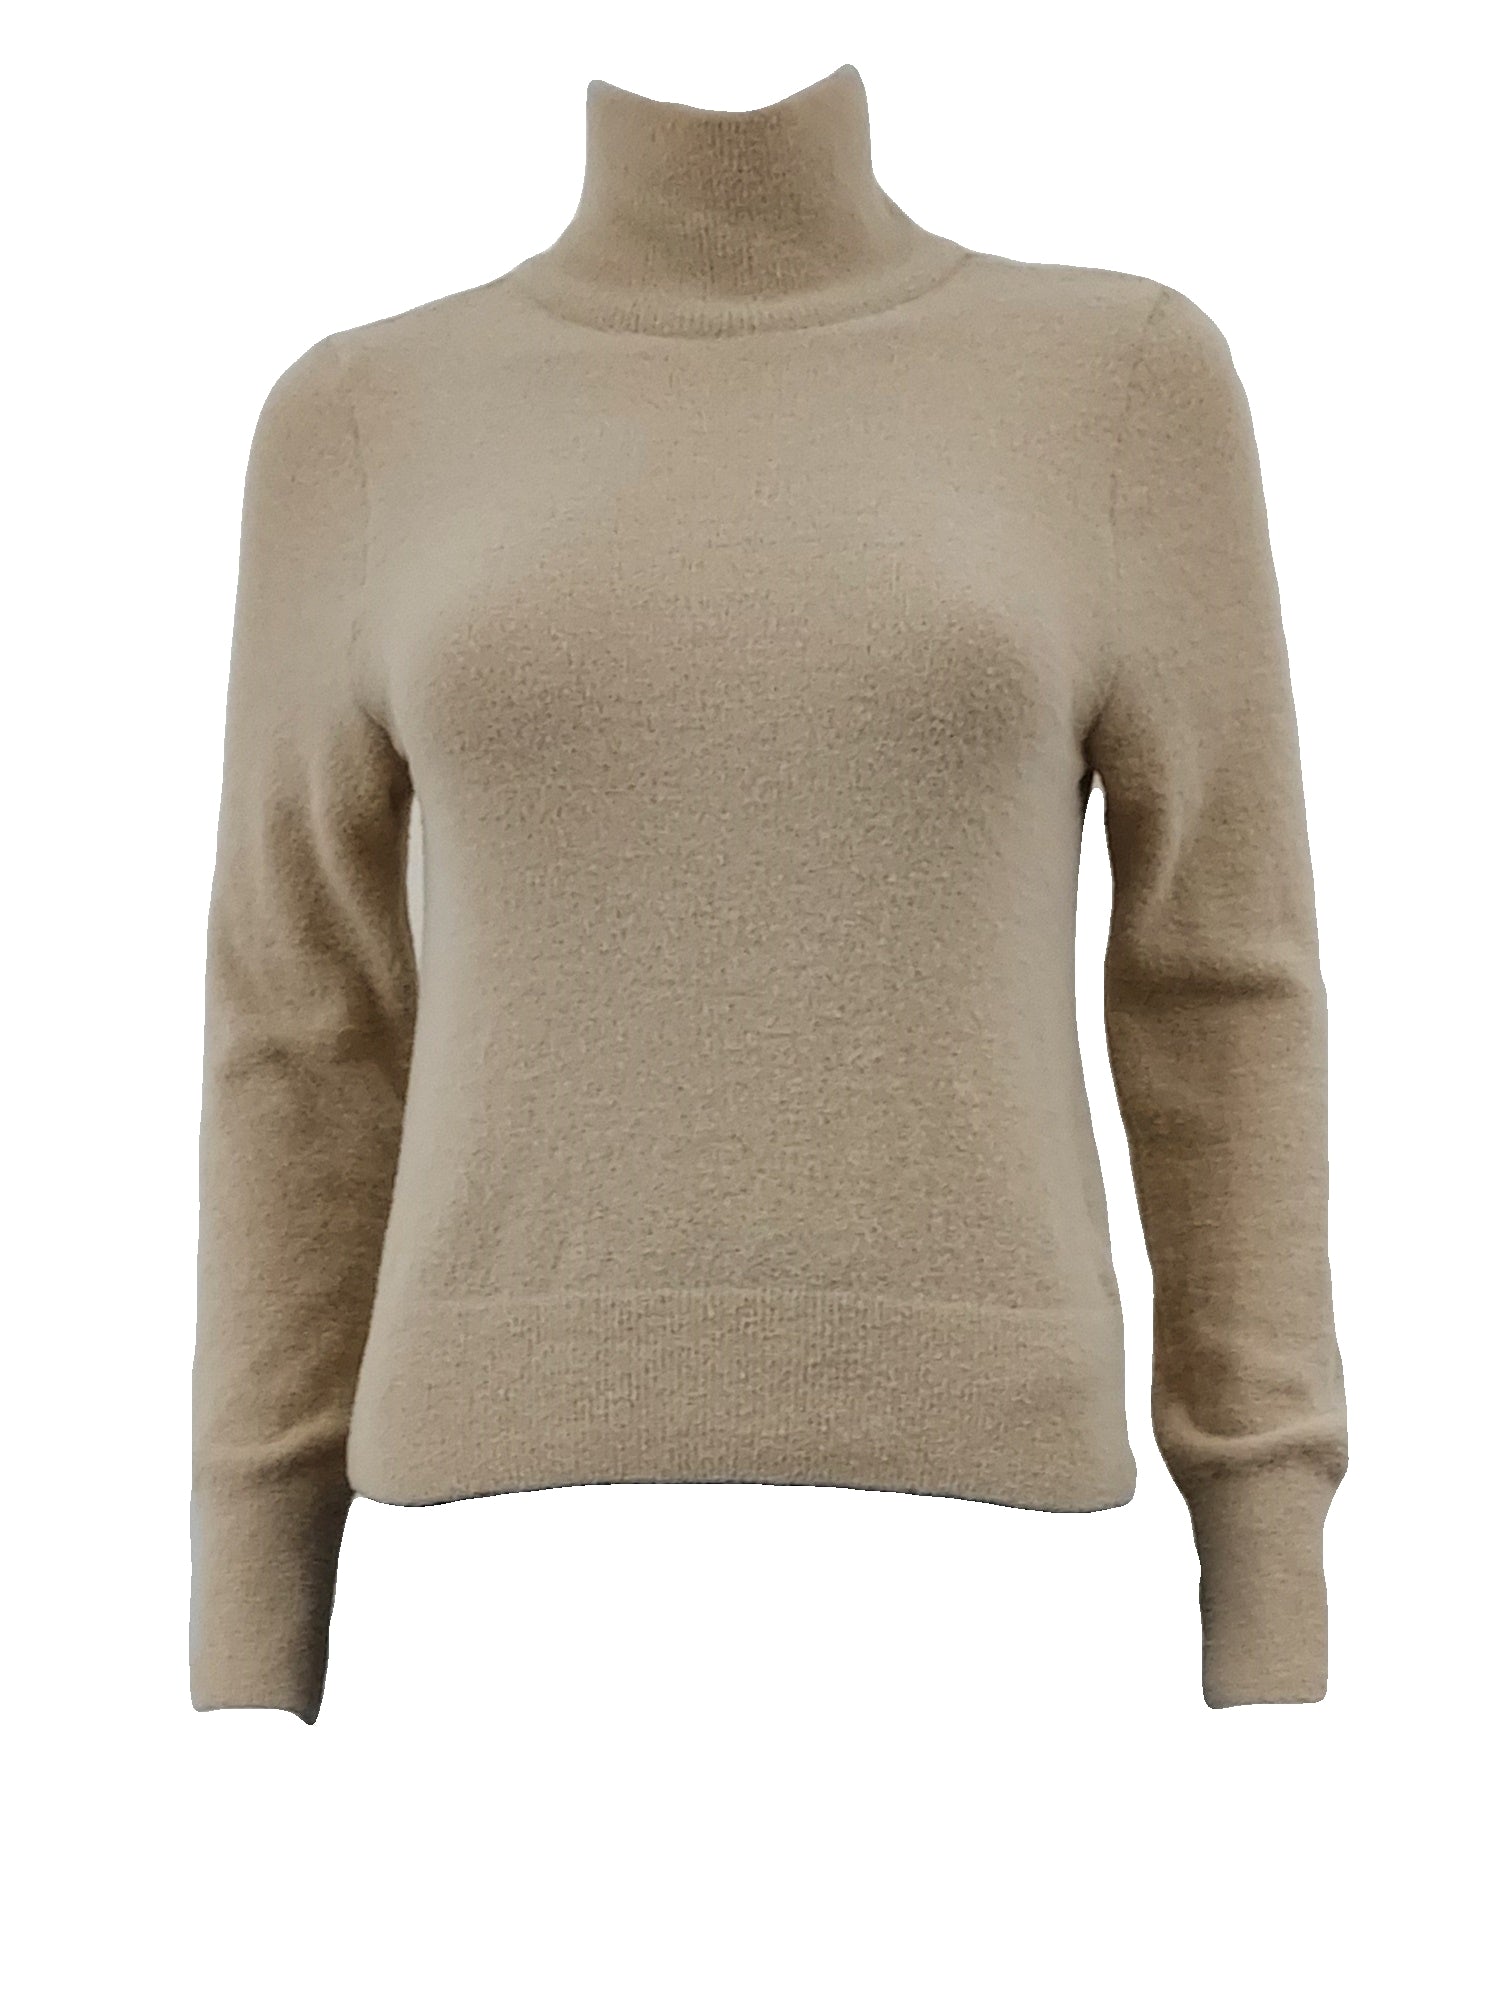 Boucle Turtleneck Sweater Size 4